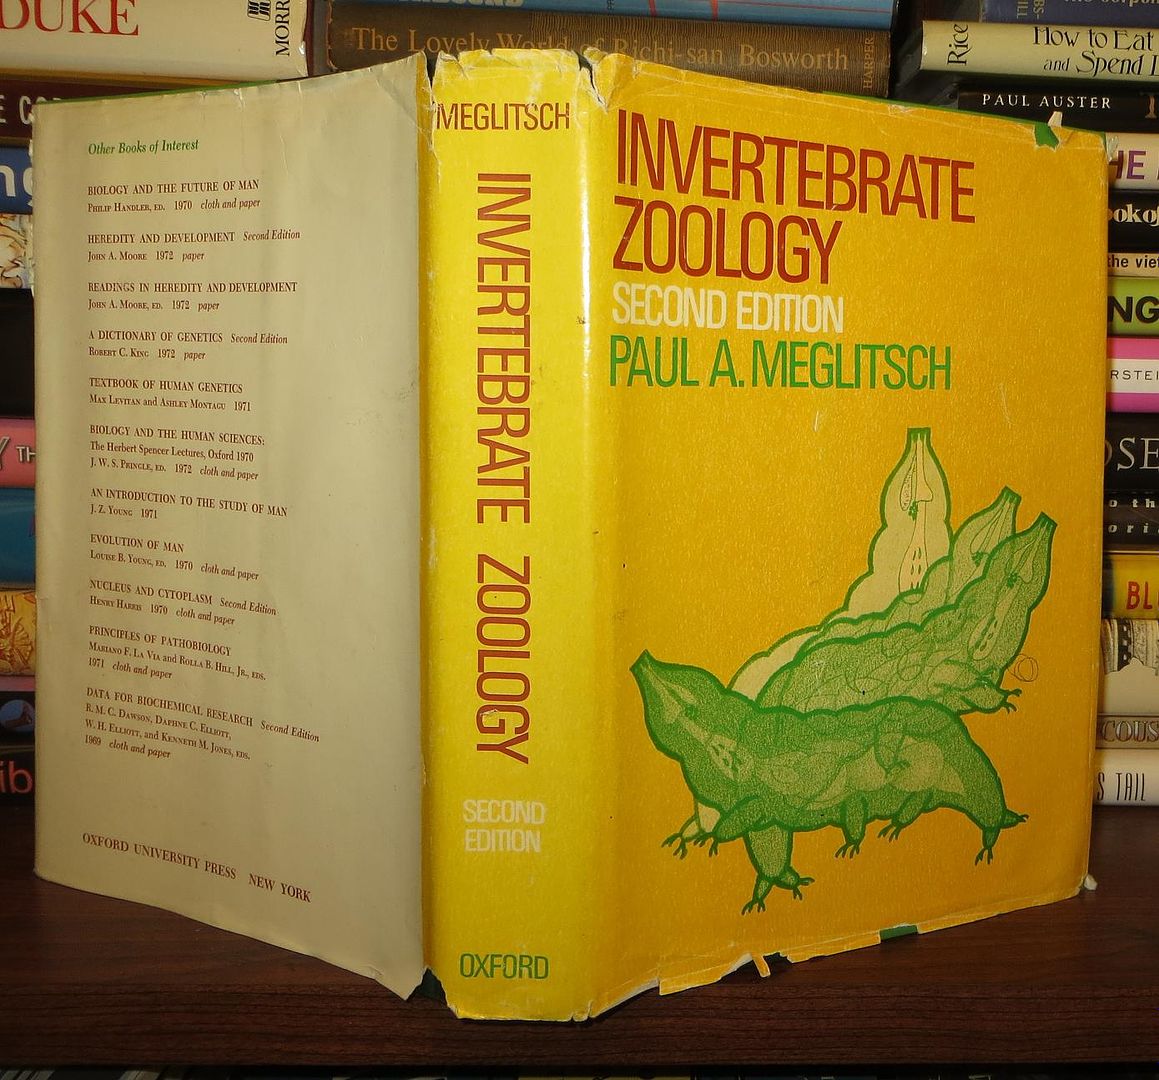 MEGLITSCH, PAUL A. - Invertebrate Zoology